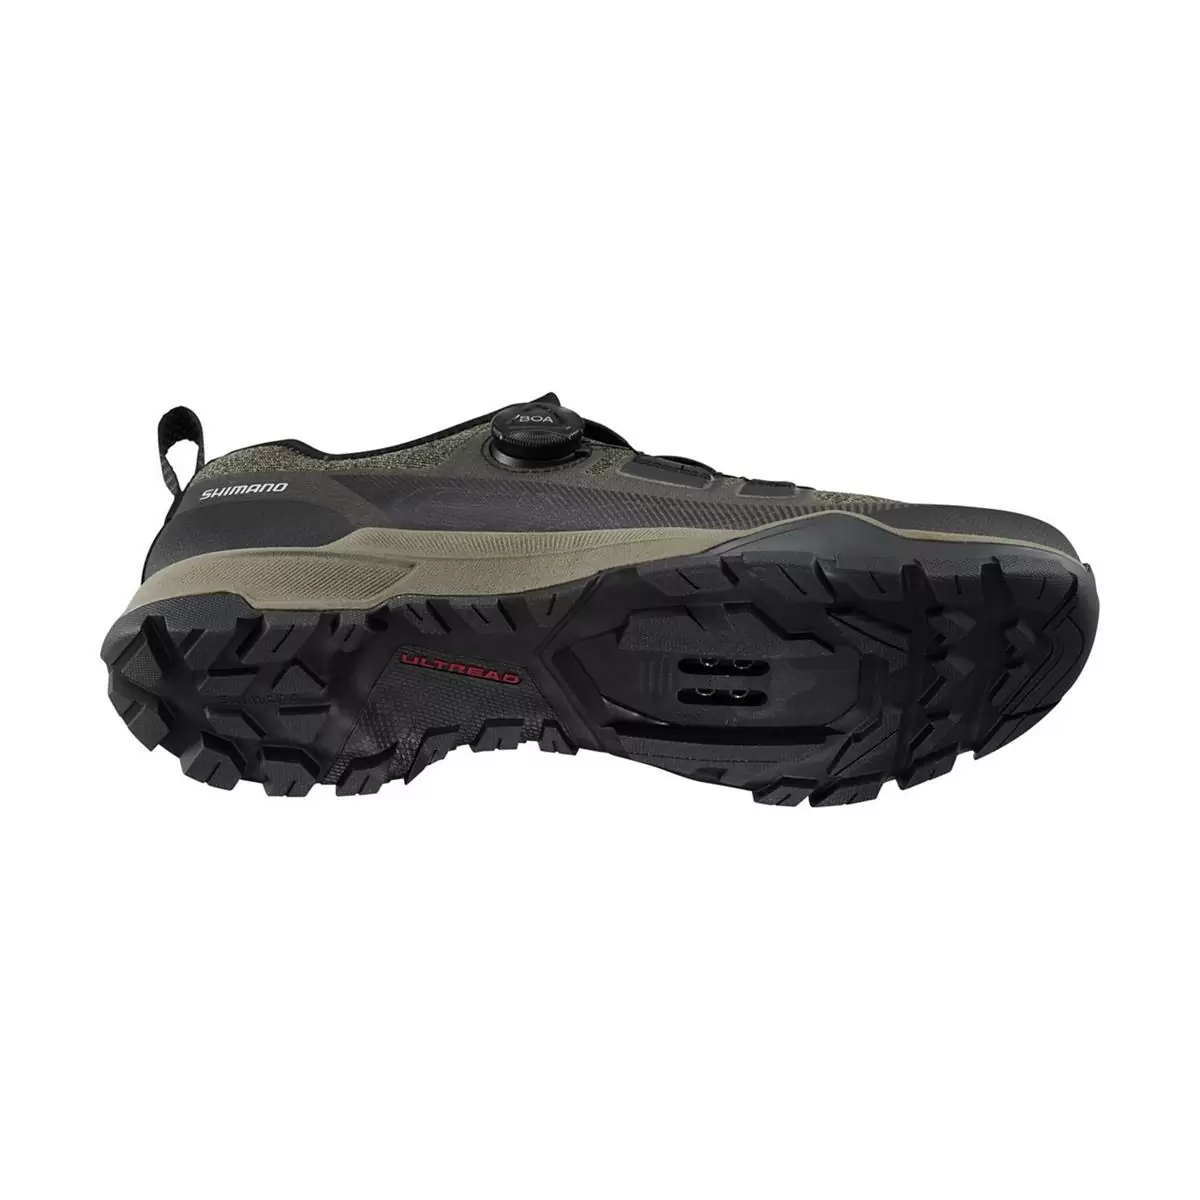 Trekking / MTB Shoes SH-EX700 Green Size 43 #2